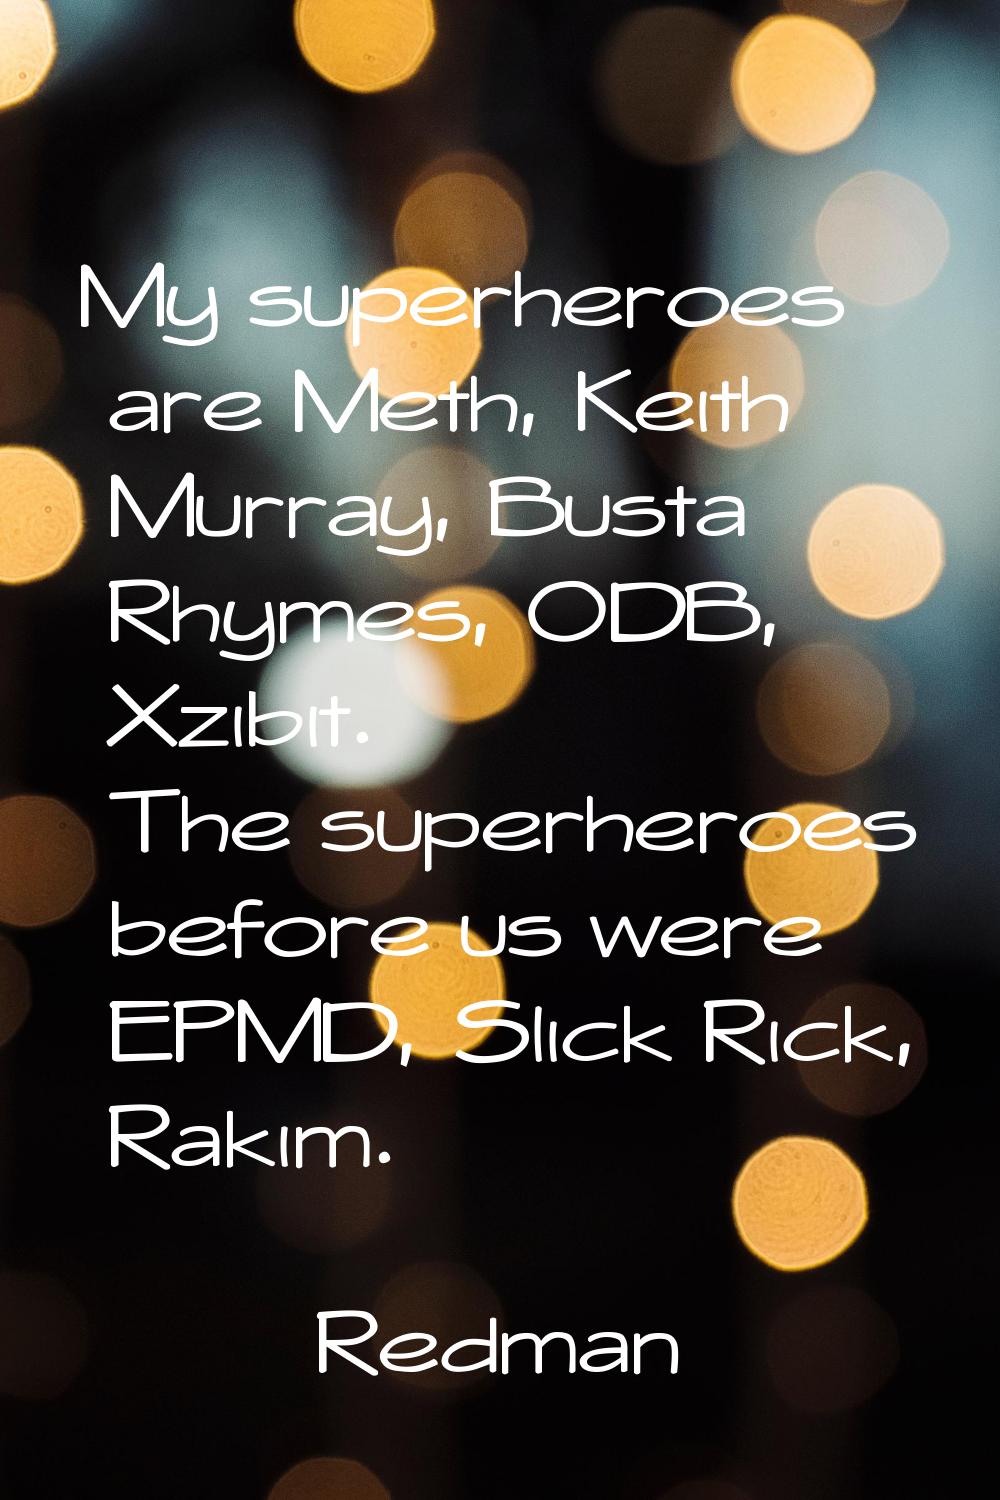 My superheroes are Meth, Keith Murray, Busta Rhymes, ODB, Xzibit. The superheroes before us were EP